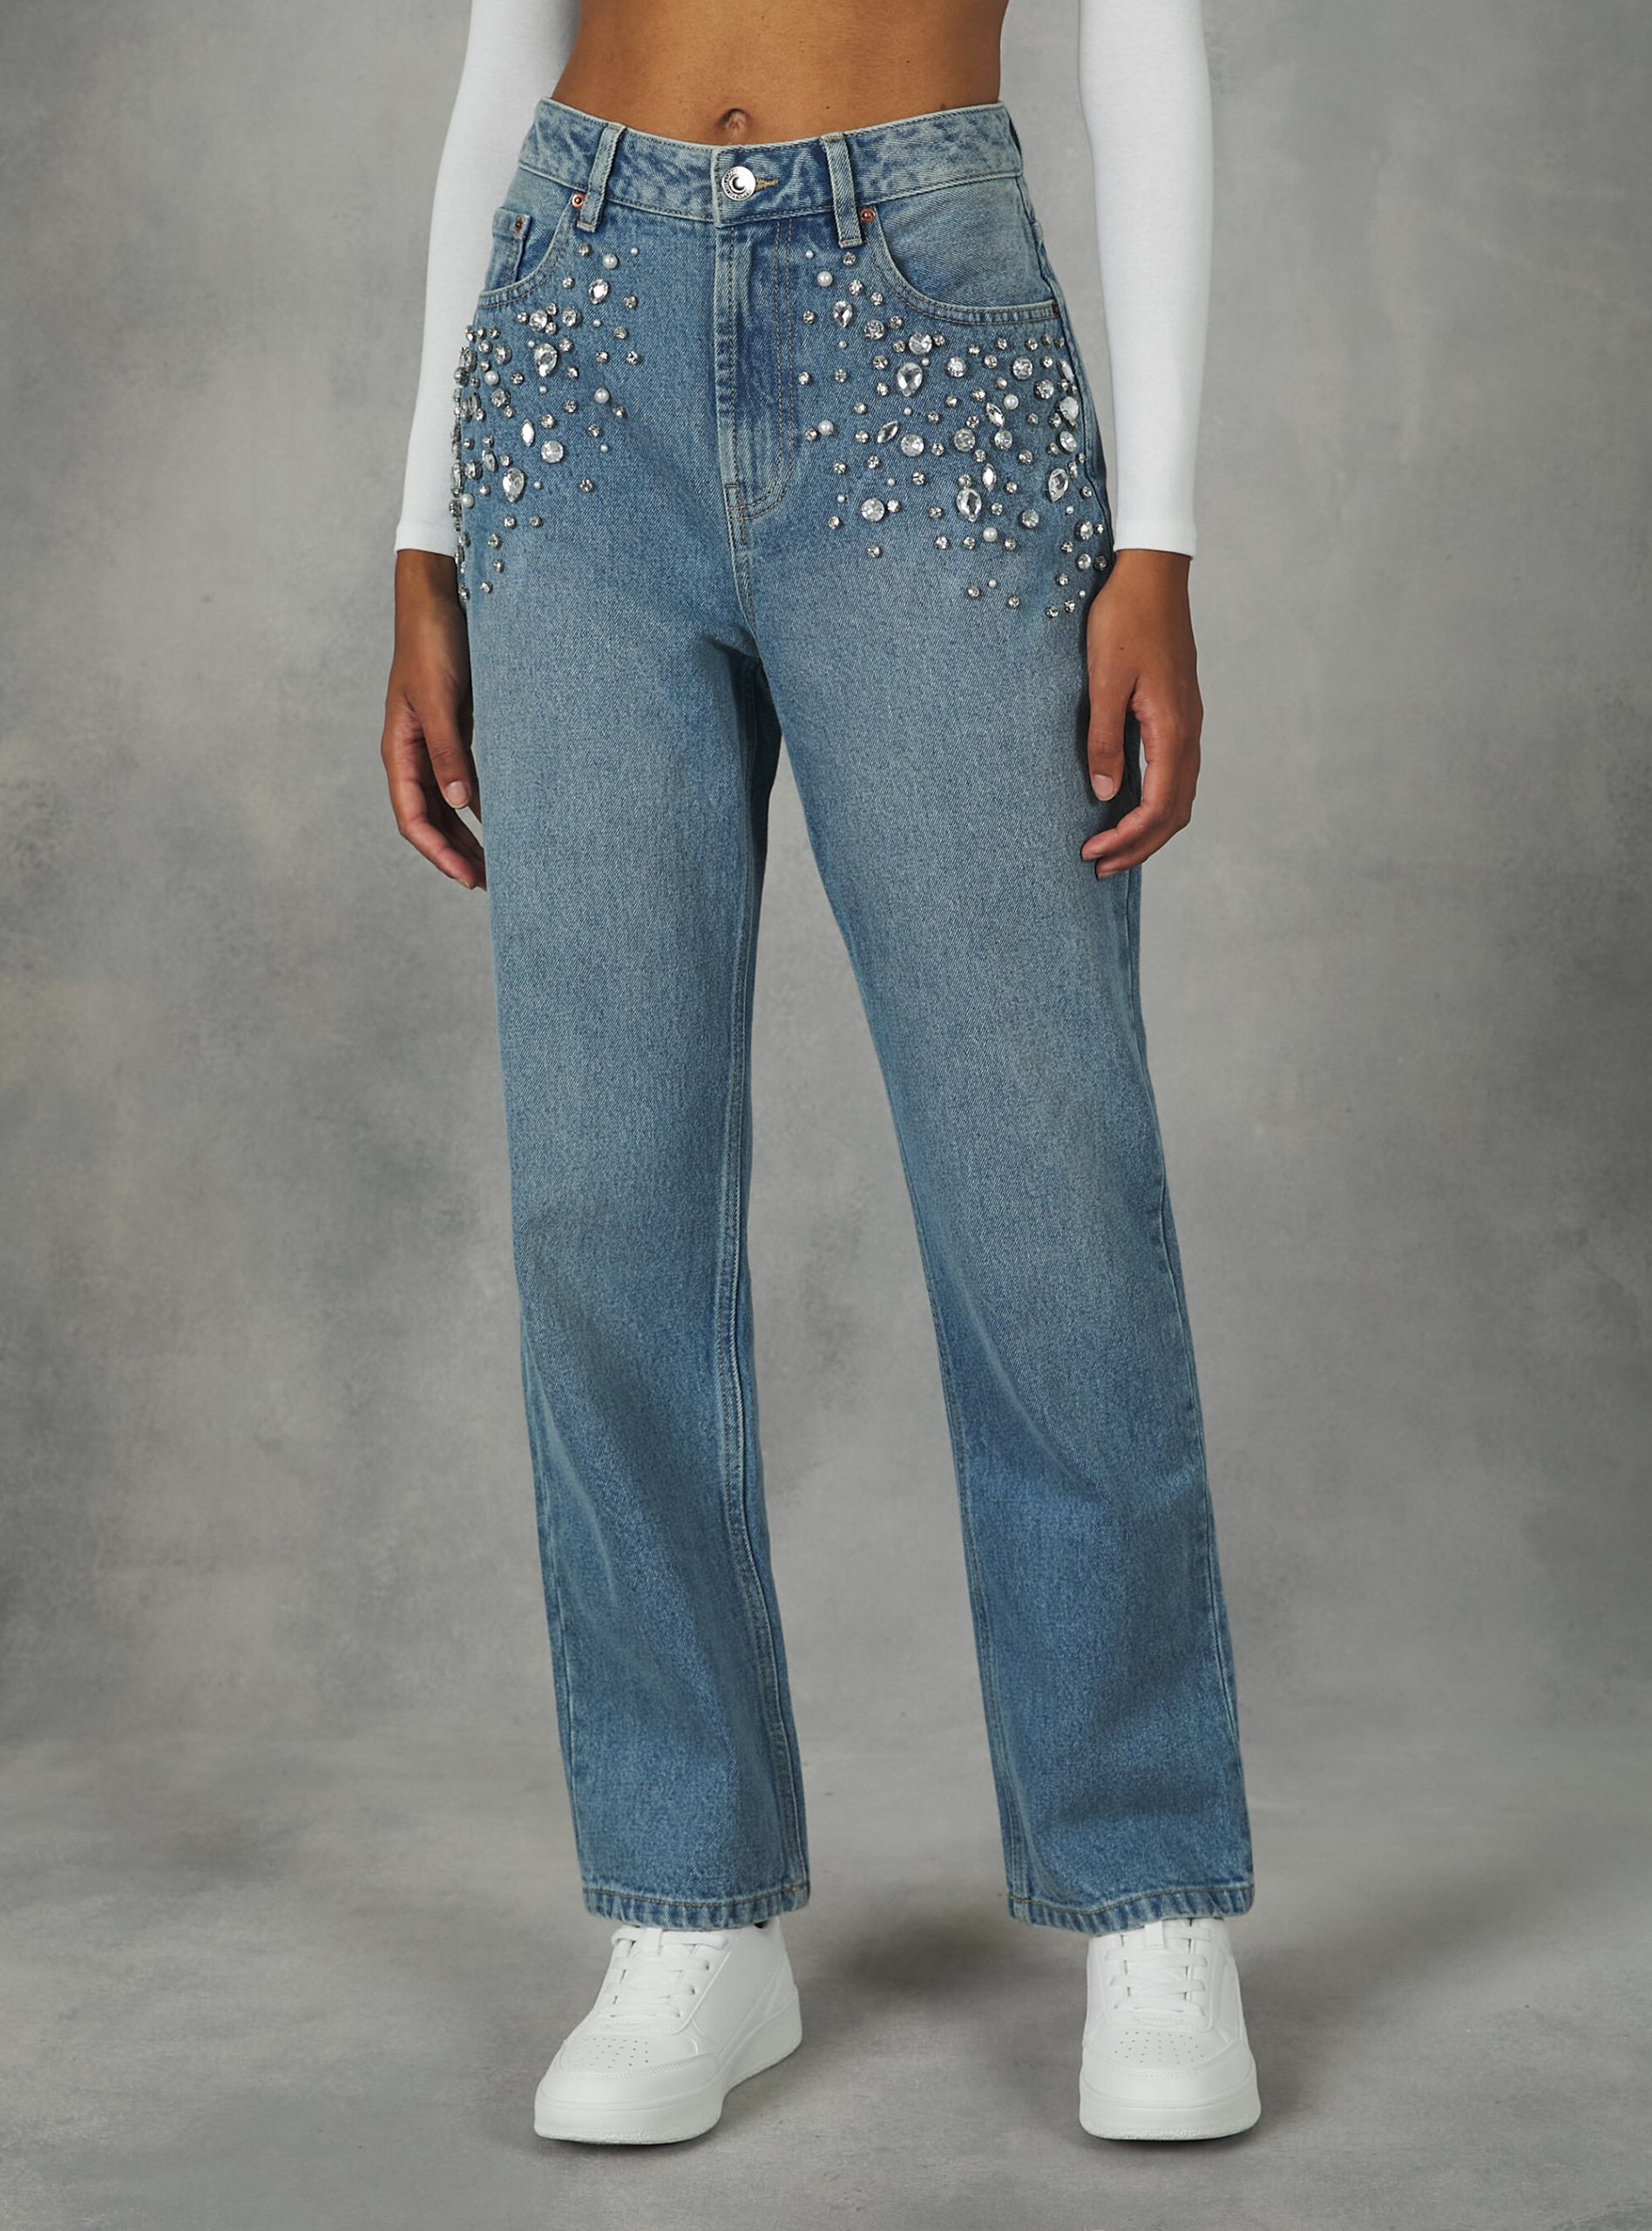 D006 Azure Frauen Night Out Straight Fit Jeans With Rhinestones Alcott Sonderangebot – 2